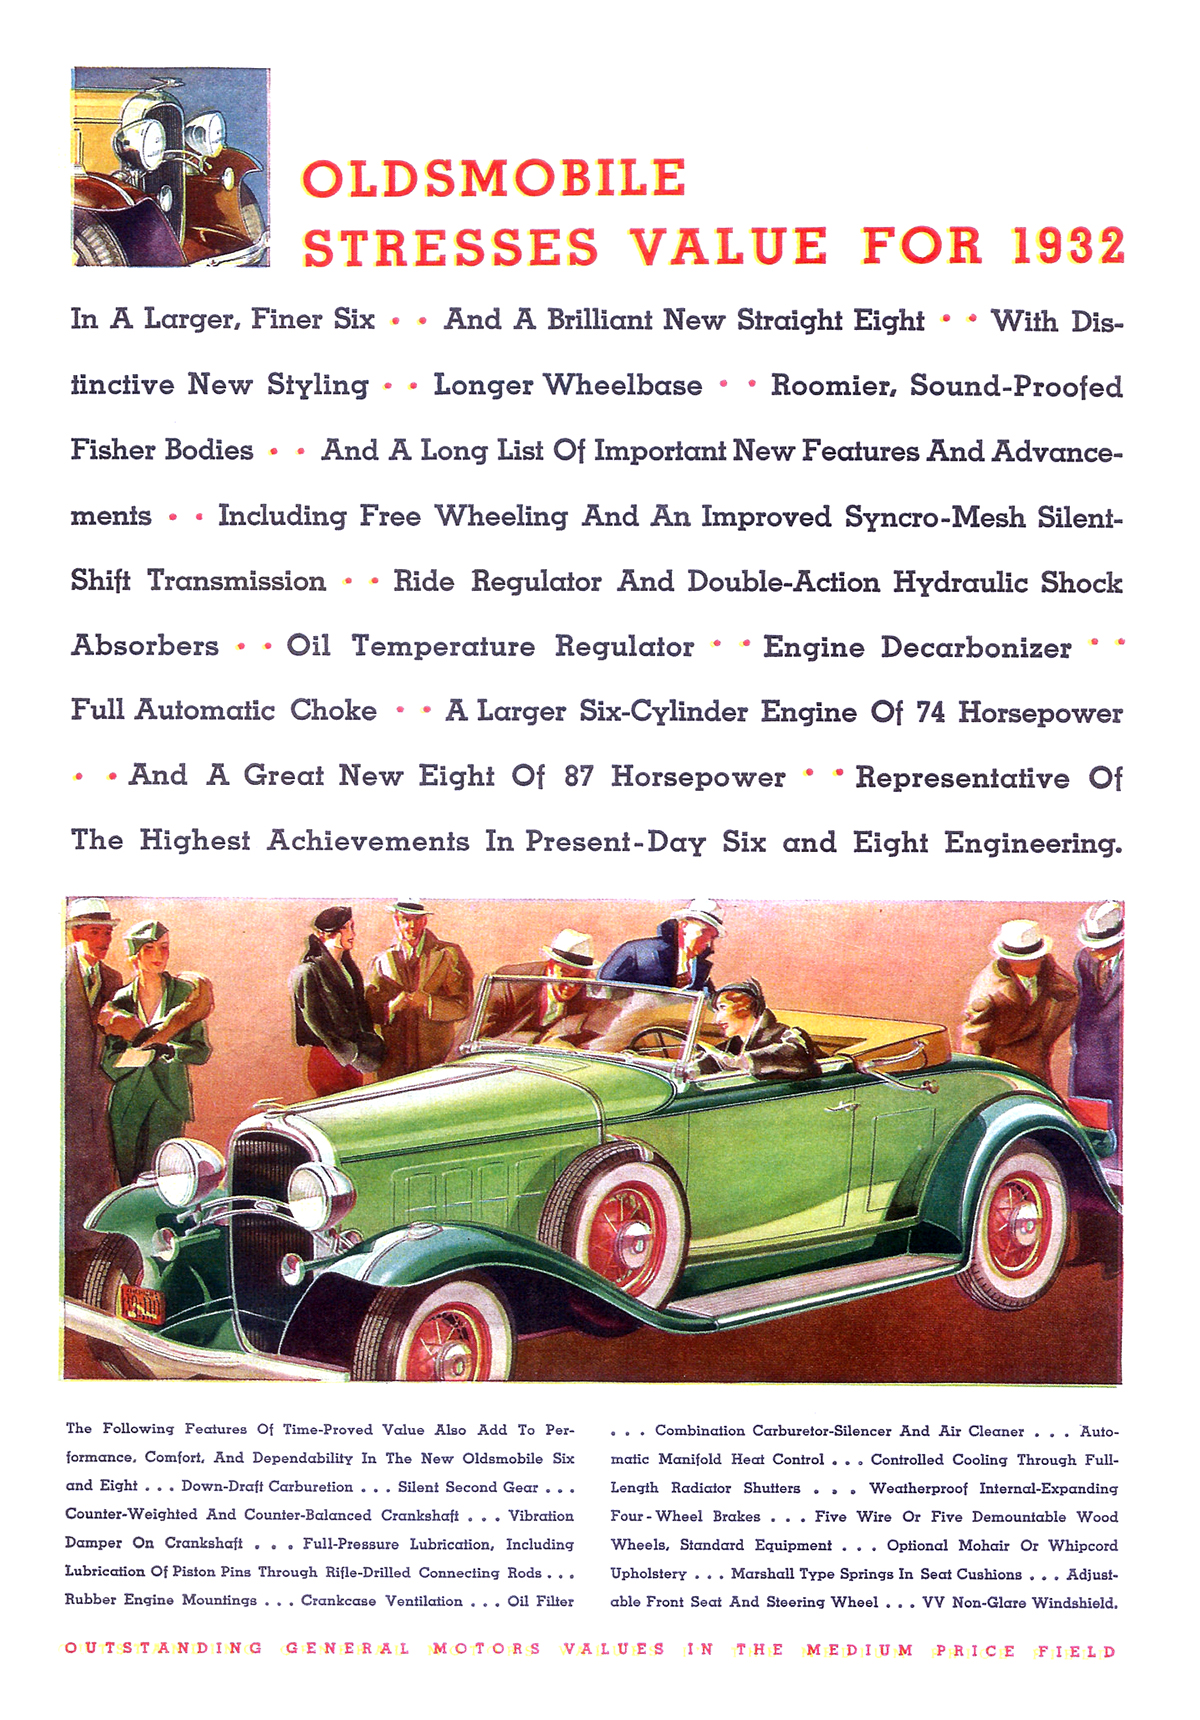 Oldsmobile Ad (February–March, 1932): Oldsmobile Stresses Value for 1932